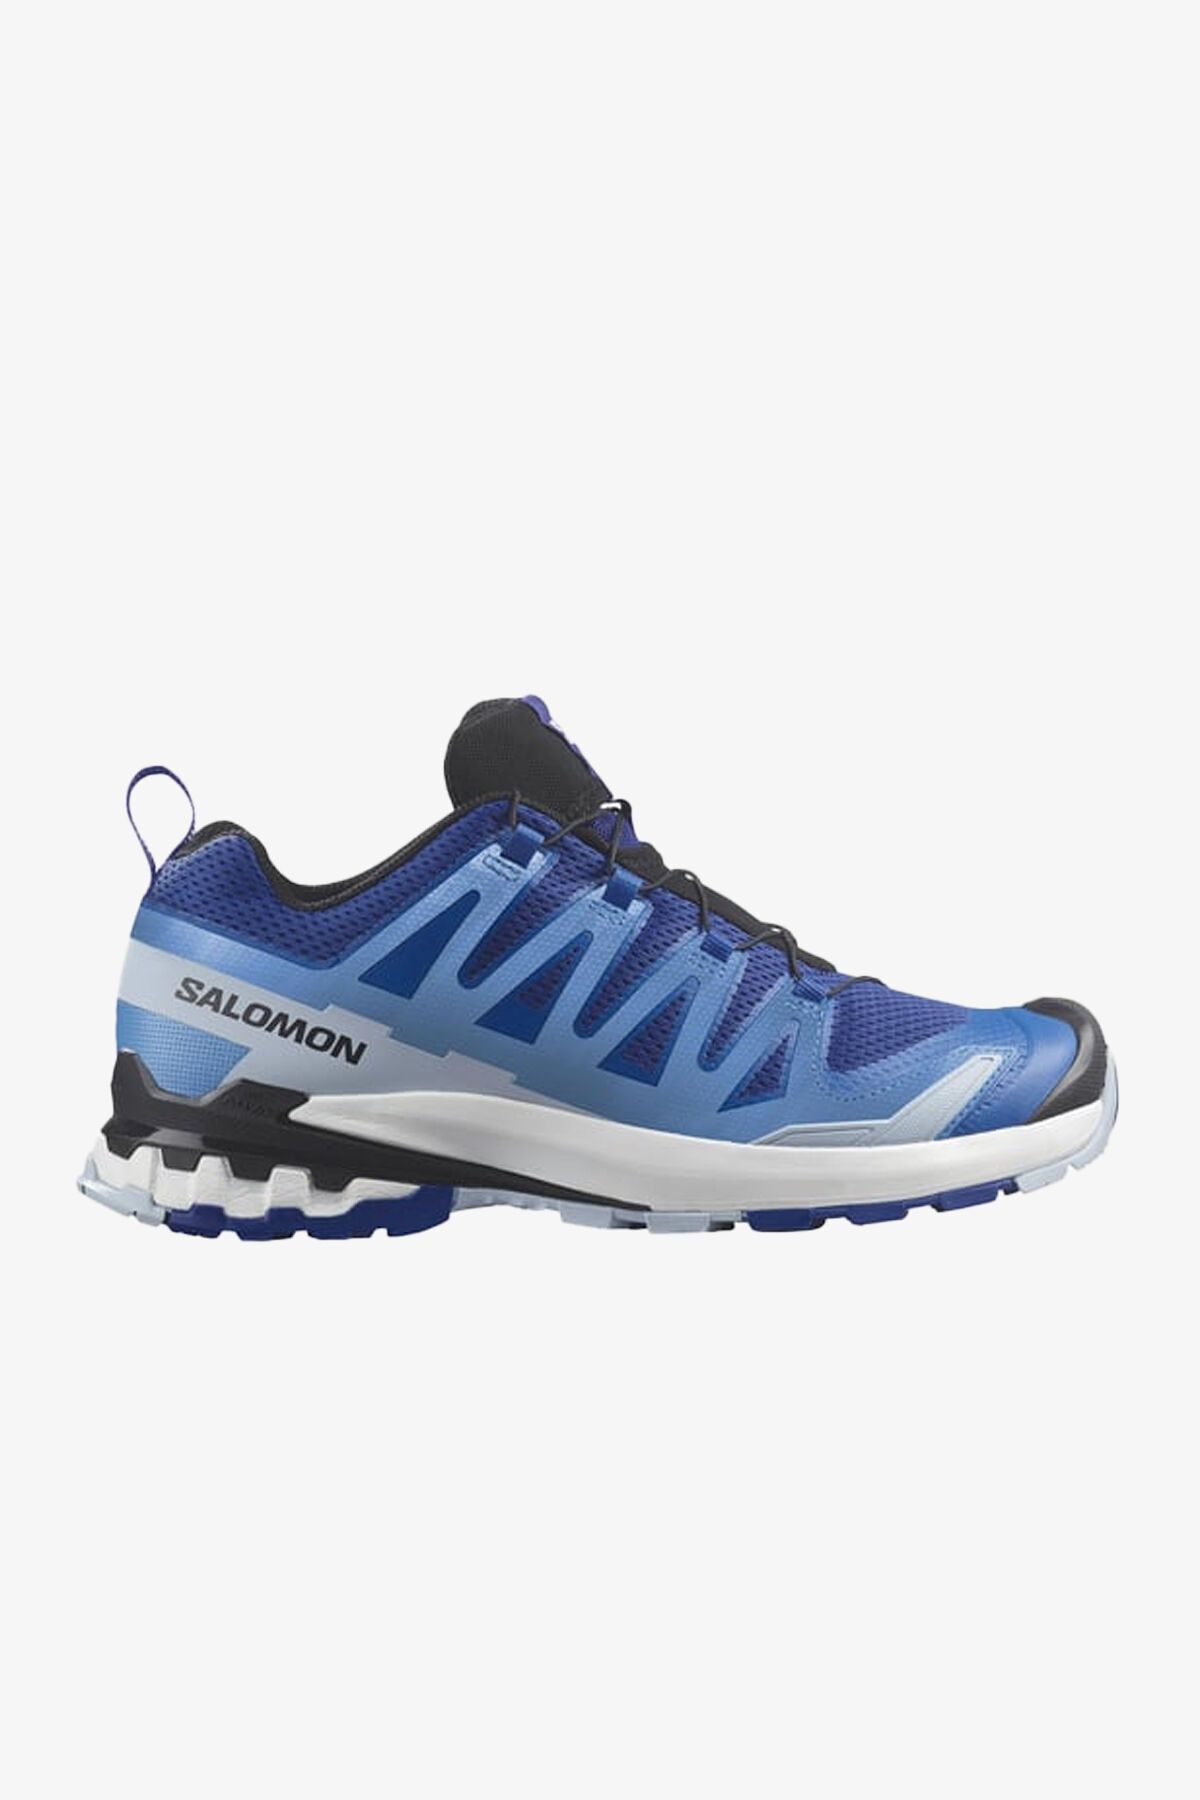 Salomon Xa Pro 3D V9 Erkek Mavi Patika Koşu Ayakkabısı L47272100-4590